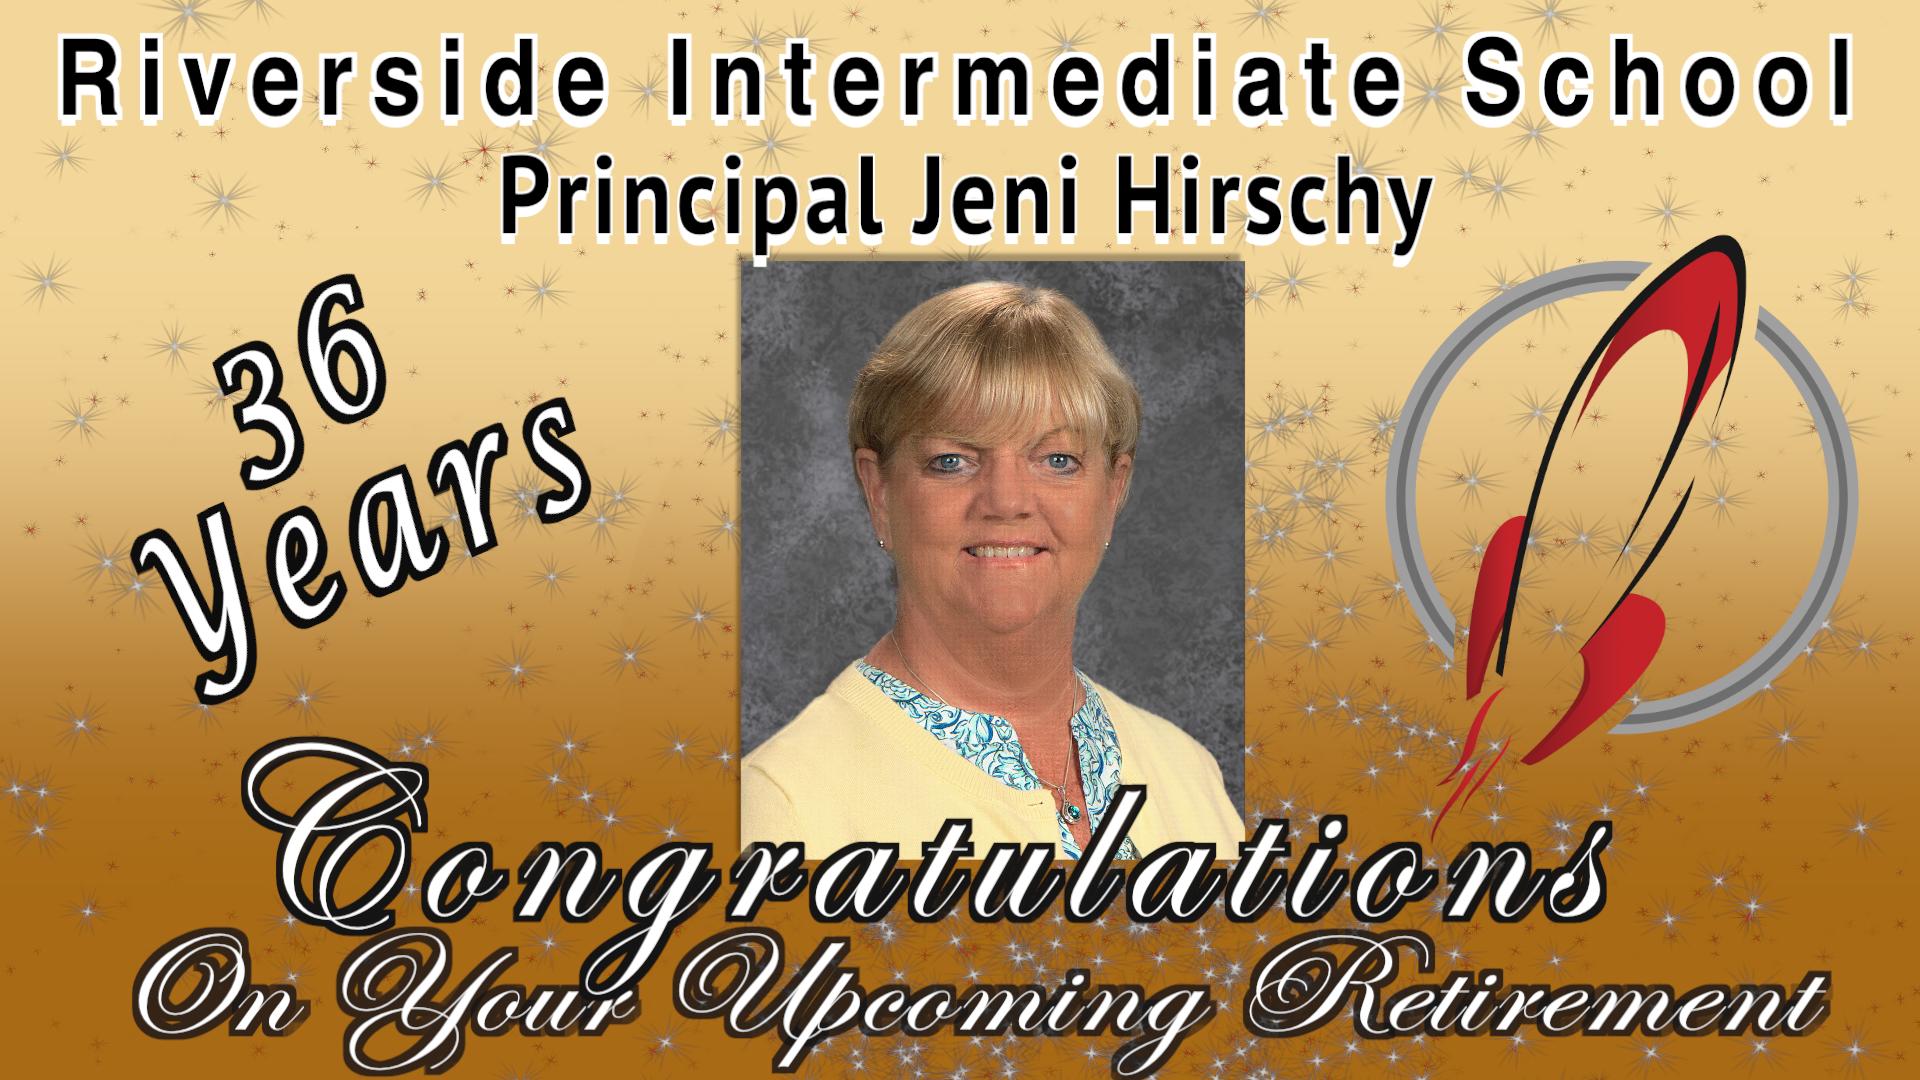 Riverside Intermediate School Principal Jeni Hirschy 36 years Congratulations on your upcoming retirement. Jeni Hirschy photo and Rocket Logo